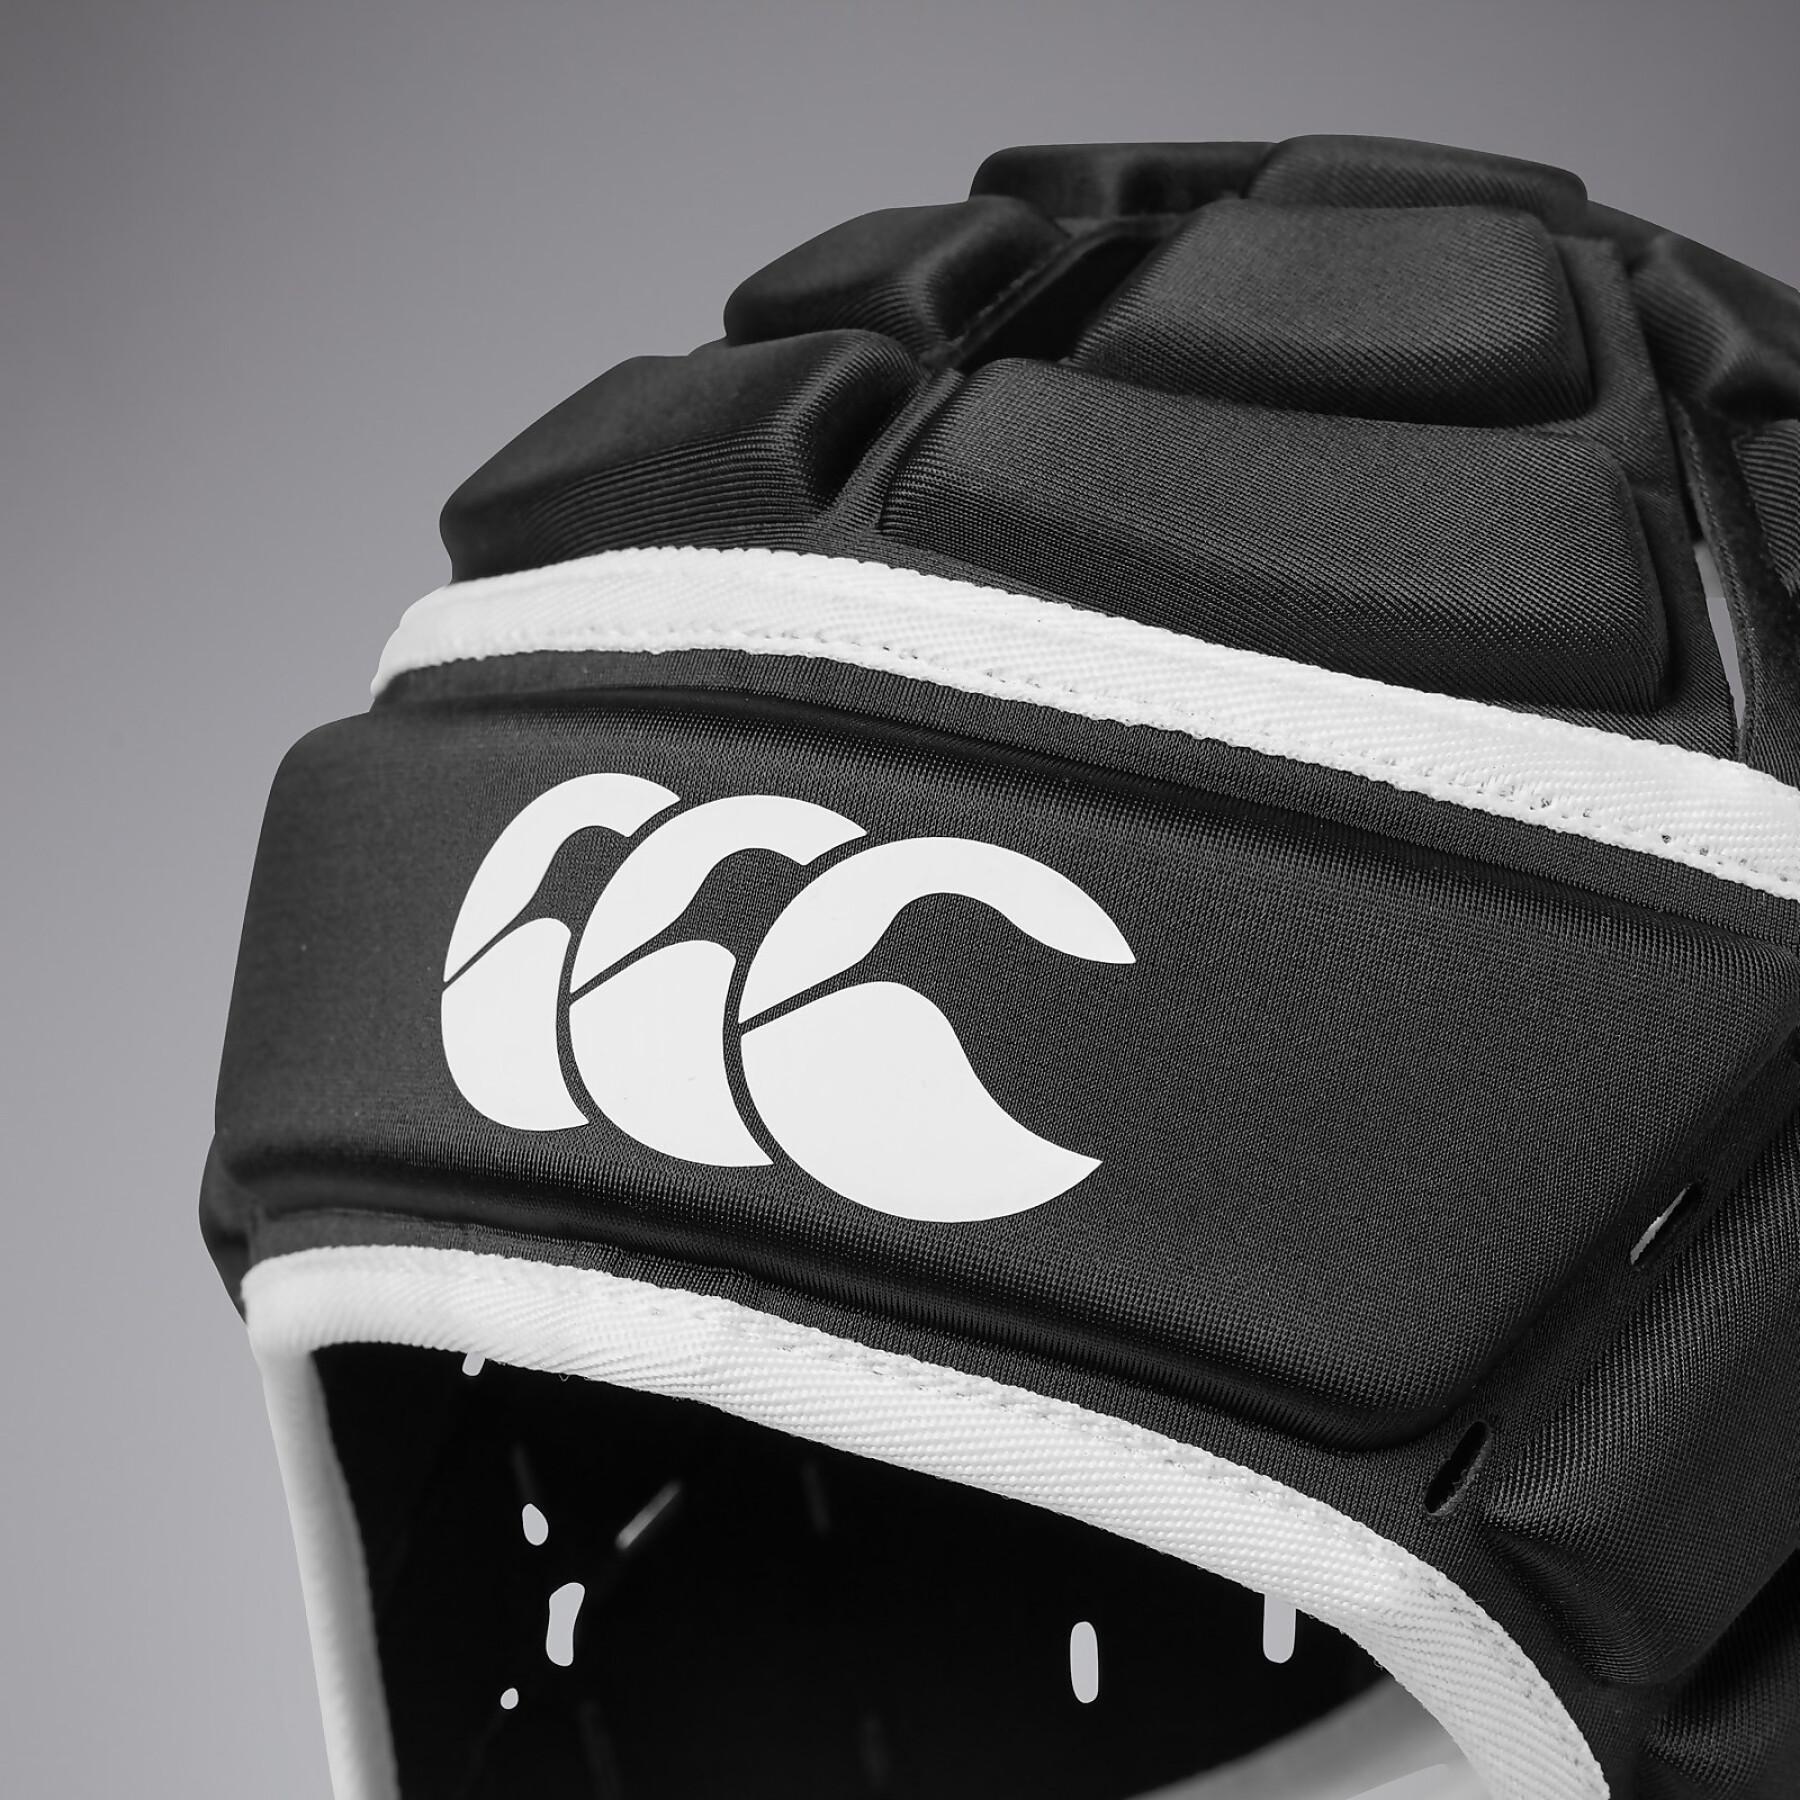 Rugby helmet Canterbury Core